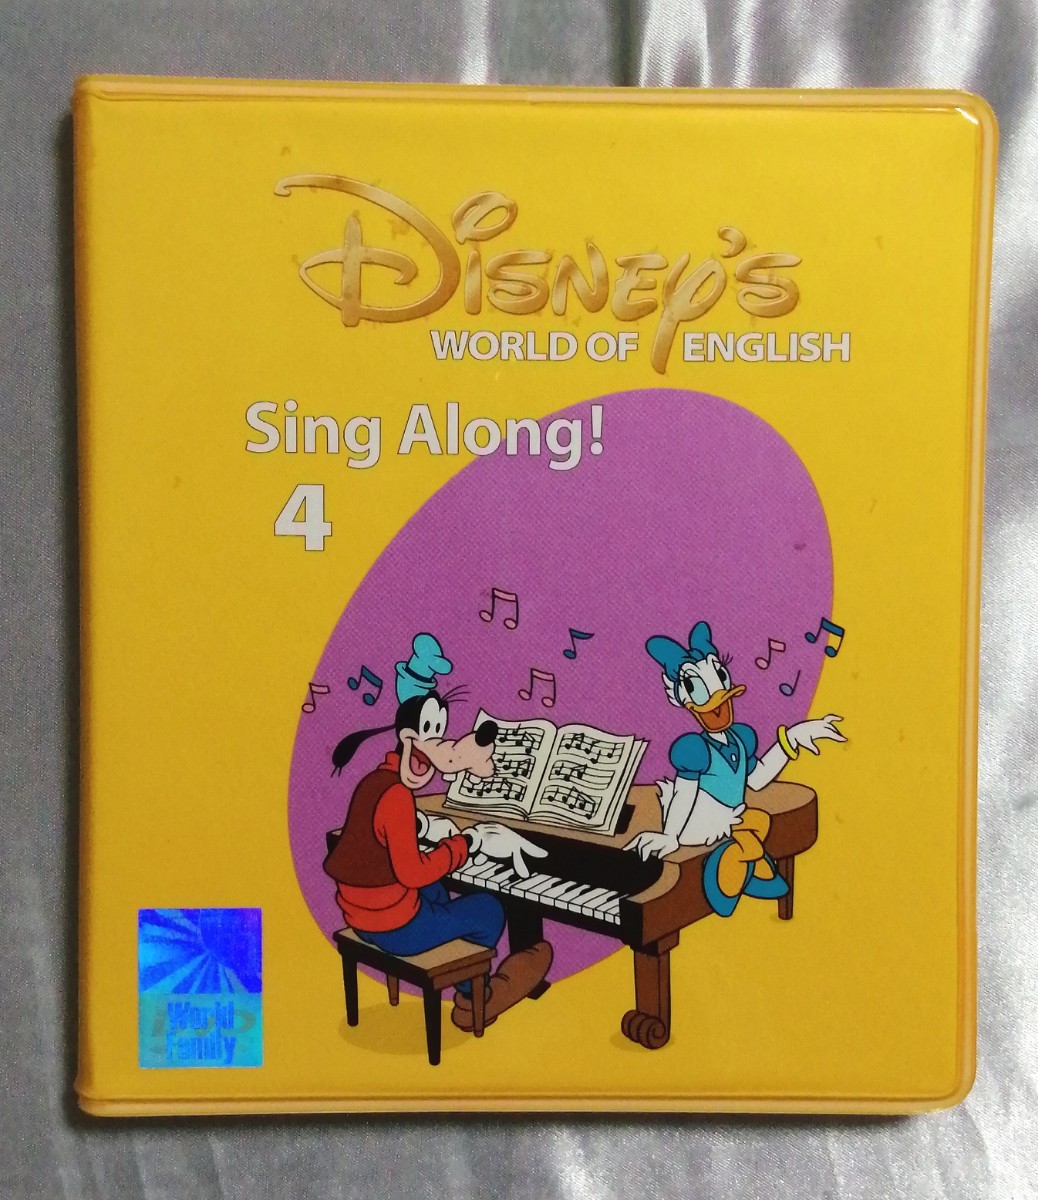 DVD ディズニー Sing Along 4 シングアロング DWE